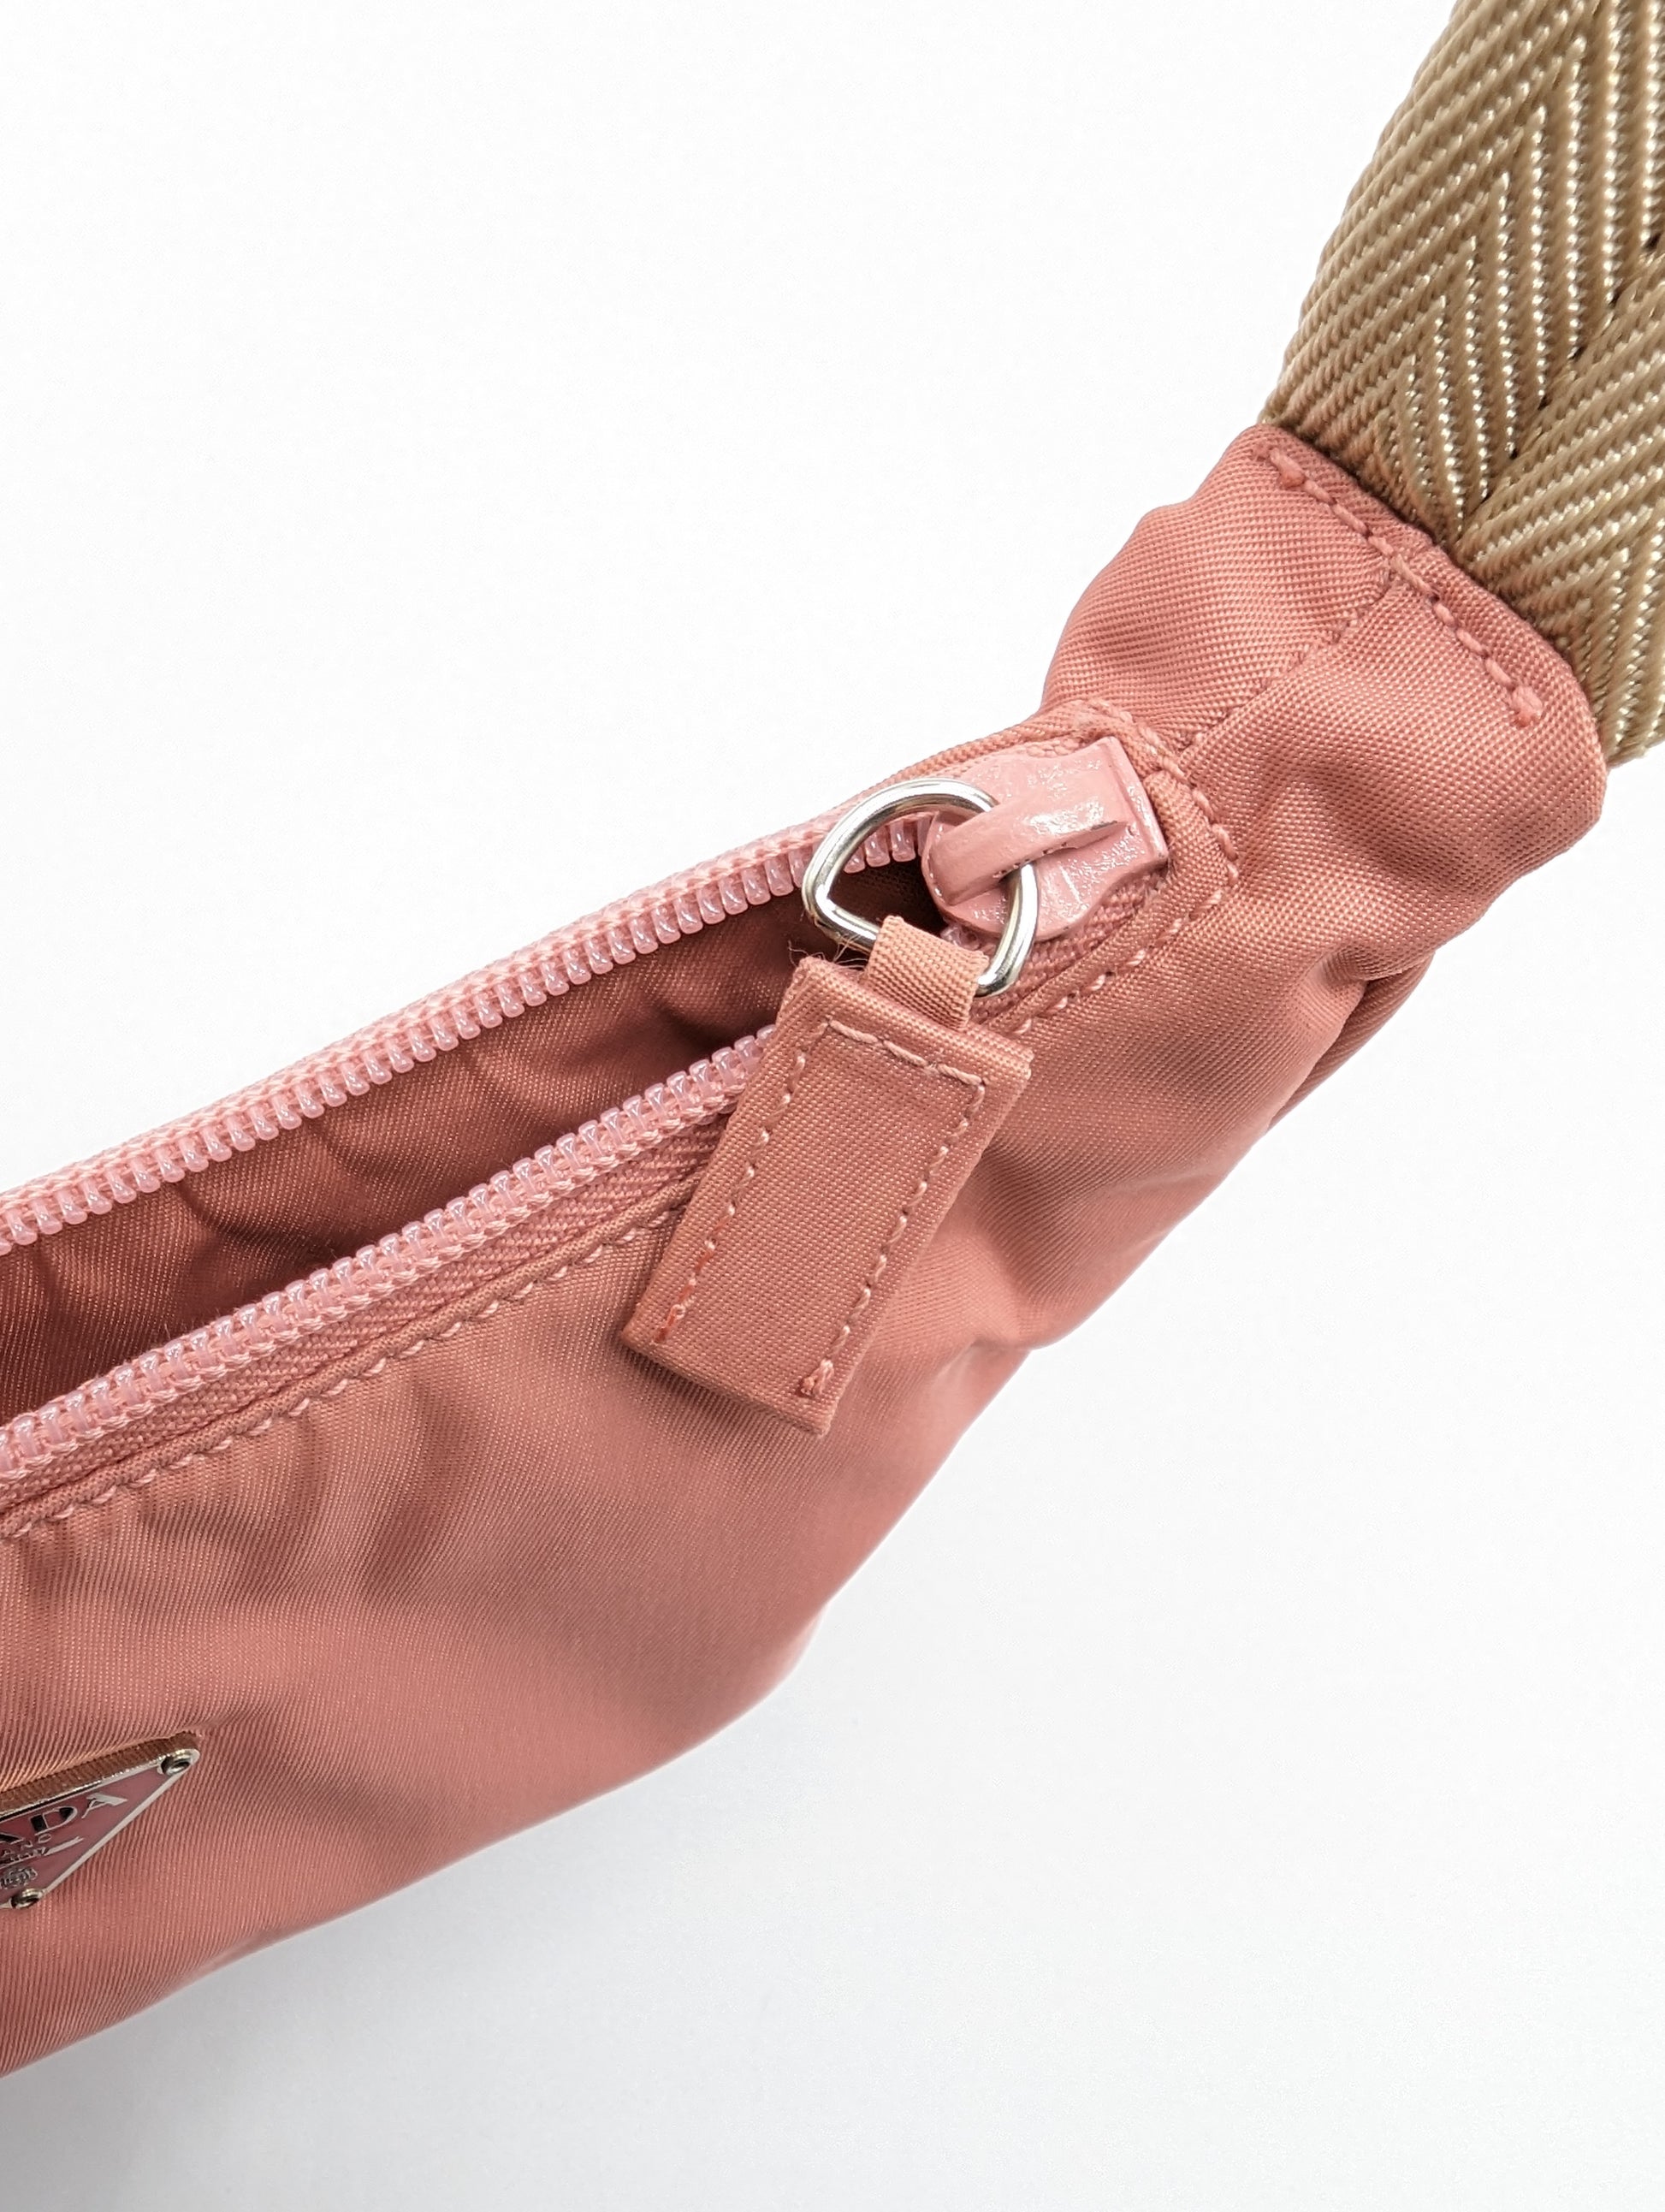 Vintage PRADA Tessuto Mini-Hobo Bag In Pink Nylon And Leather